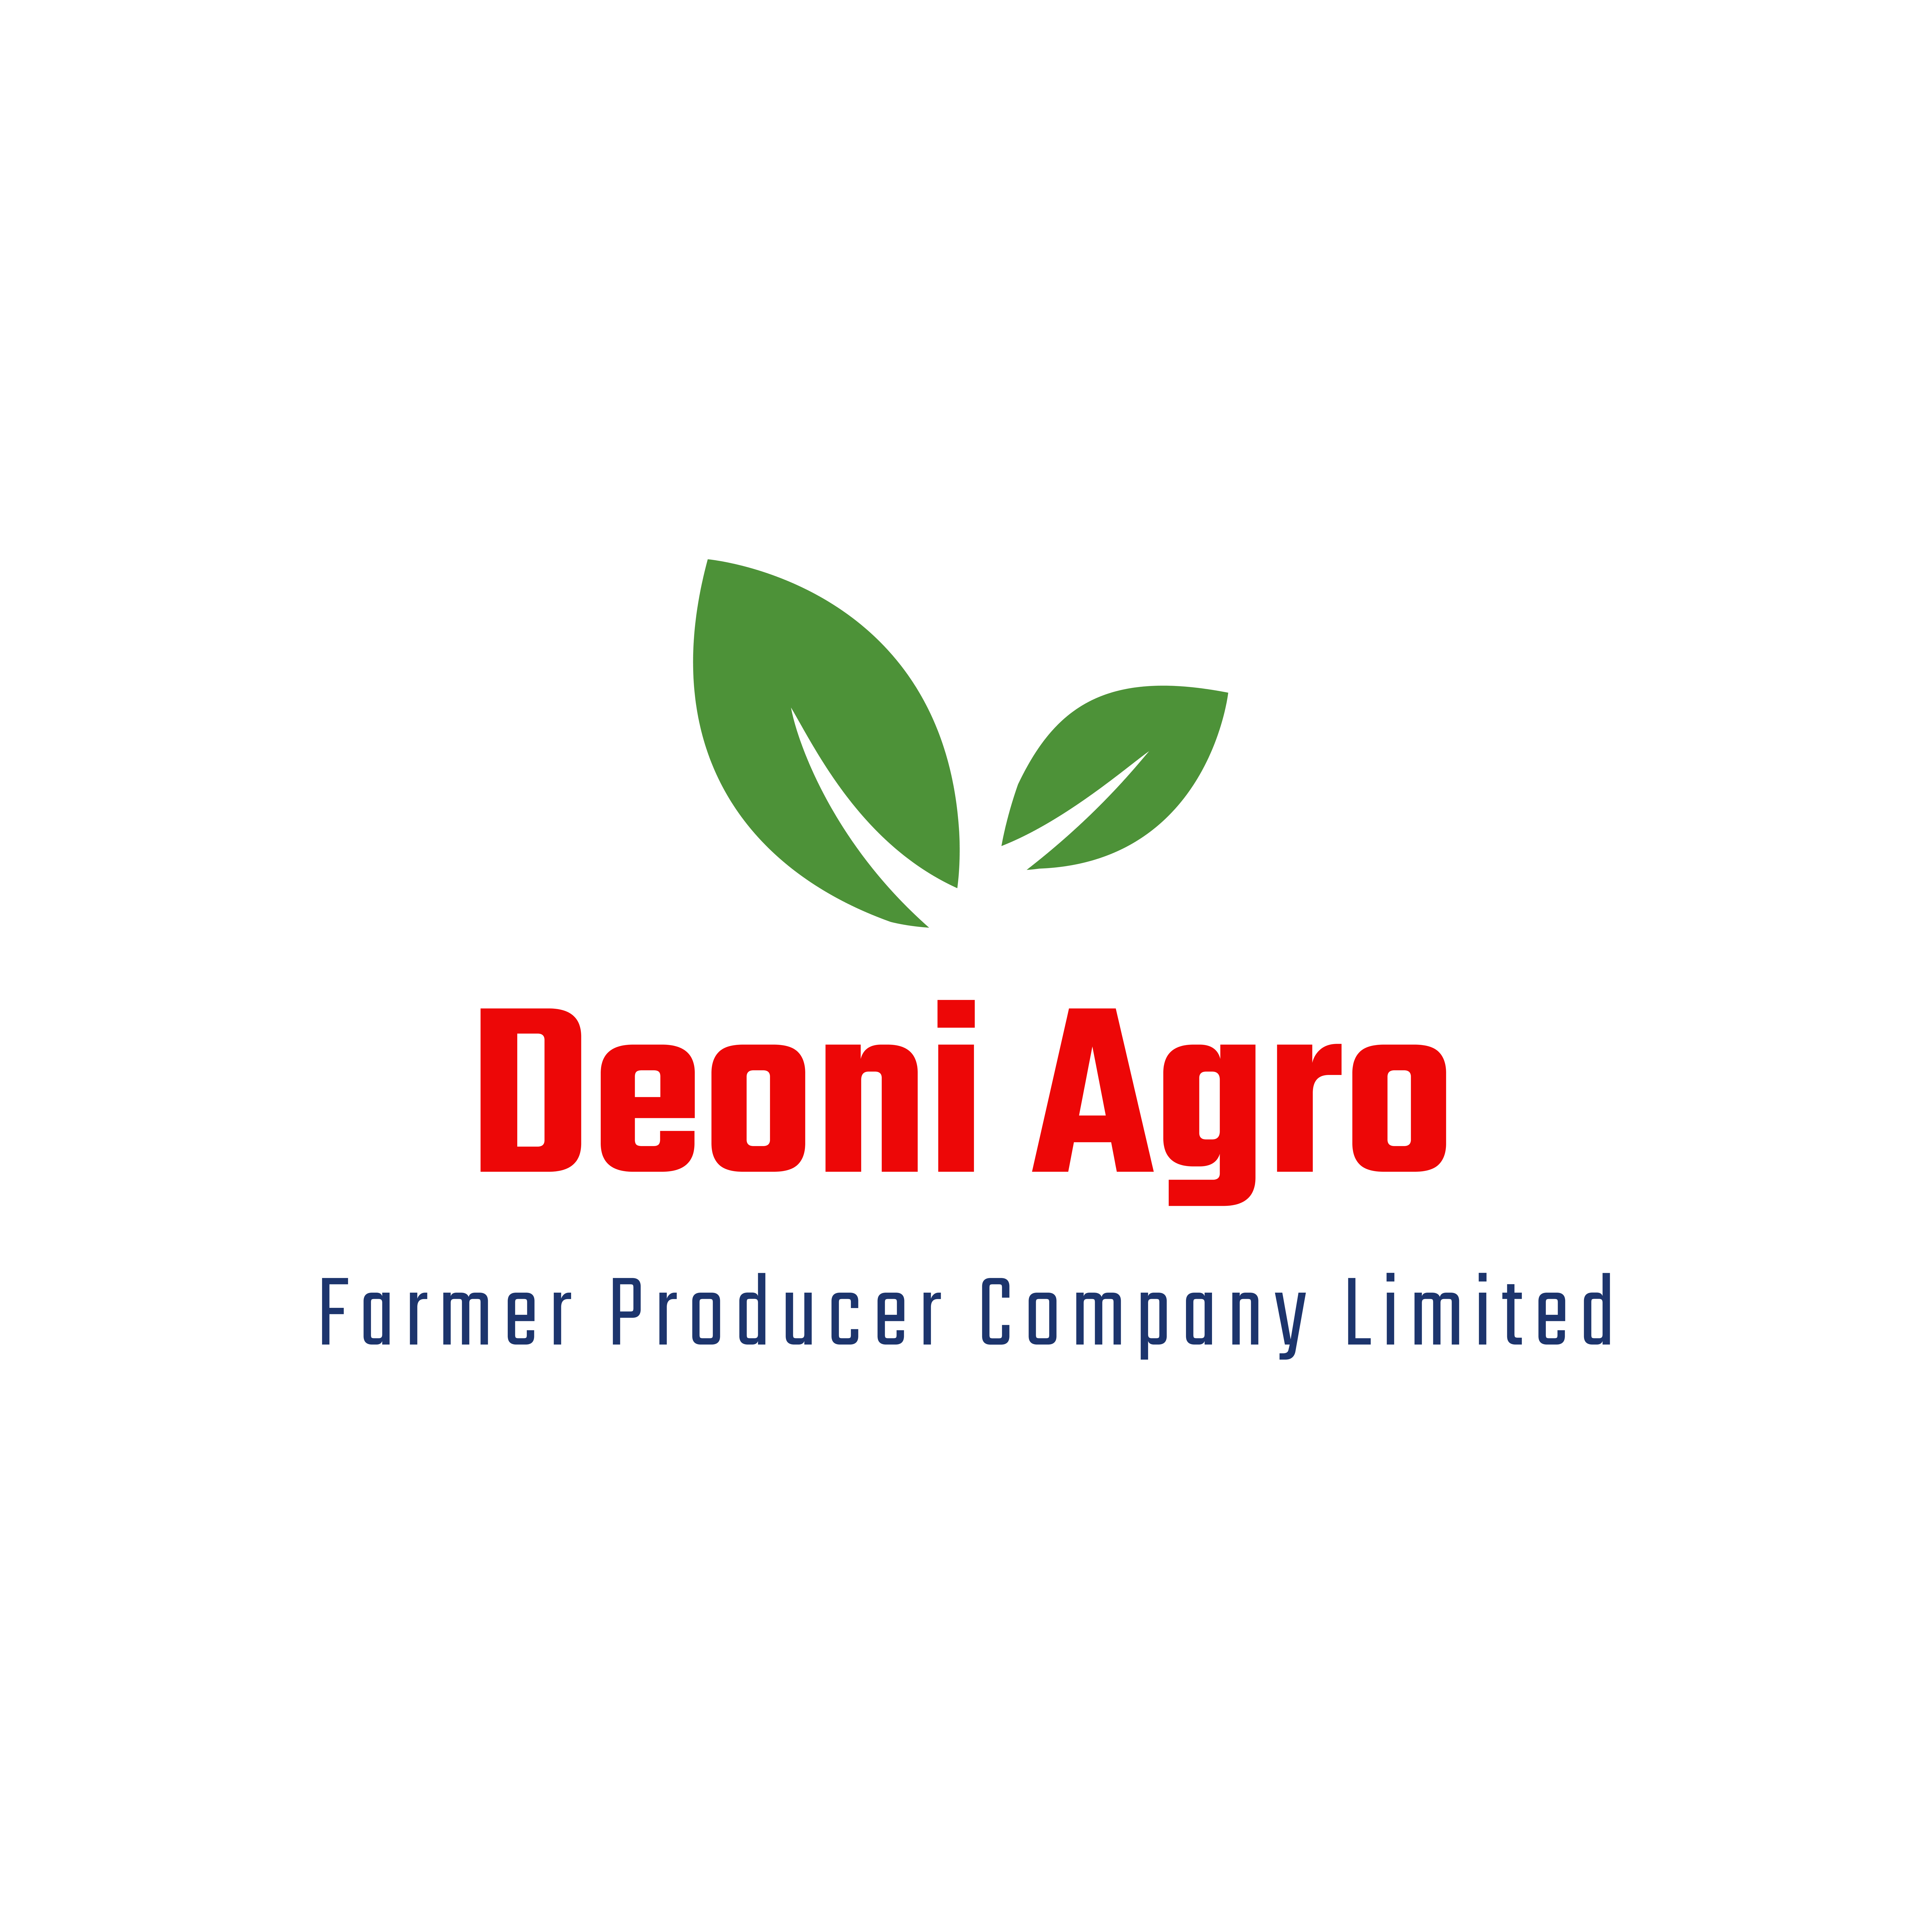 Deoni Agro Farmer Producer Company Limited